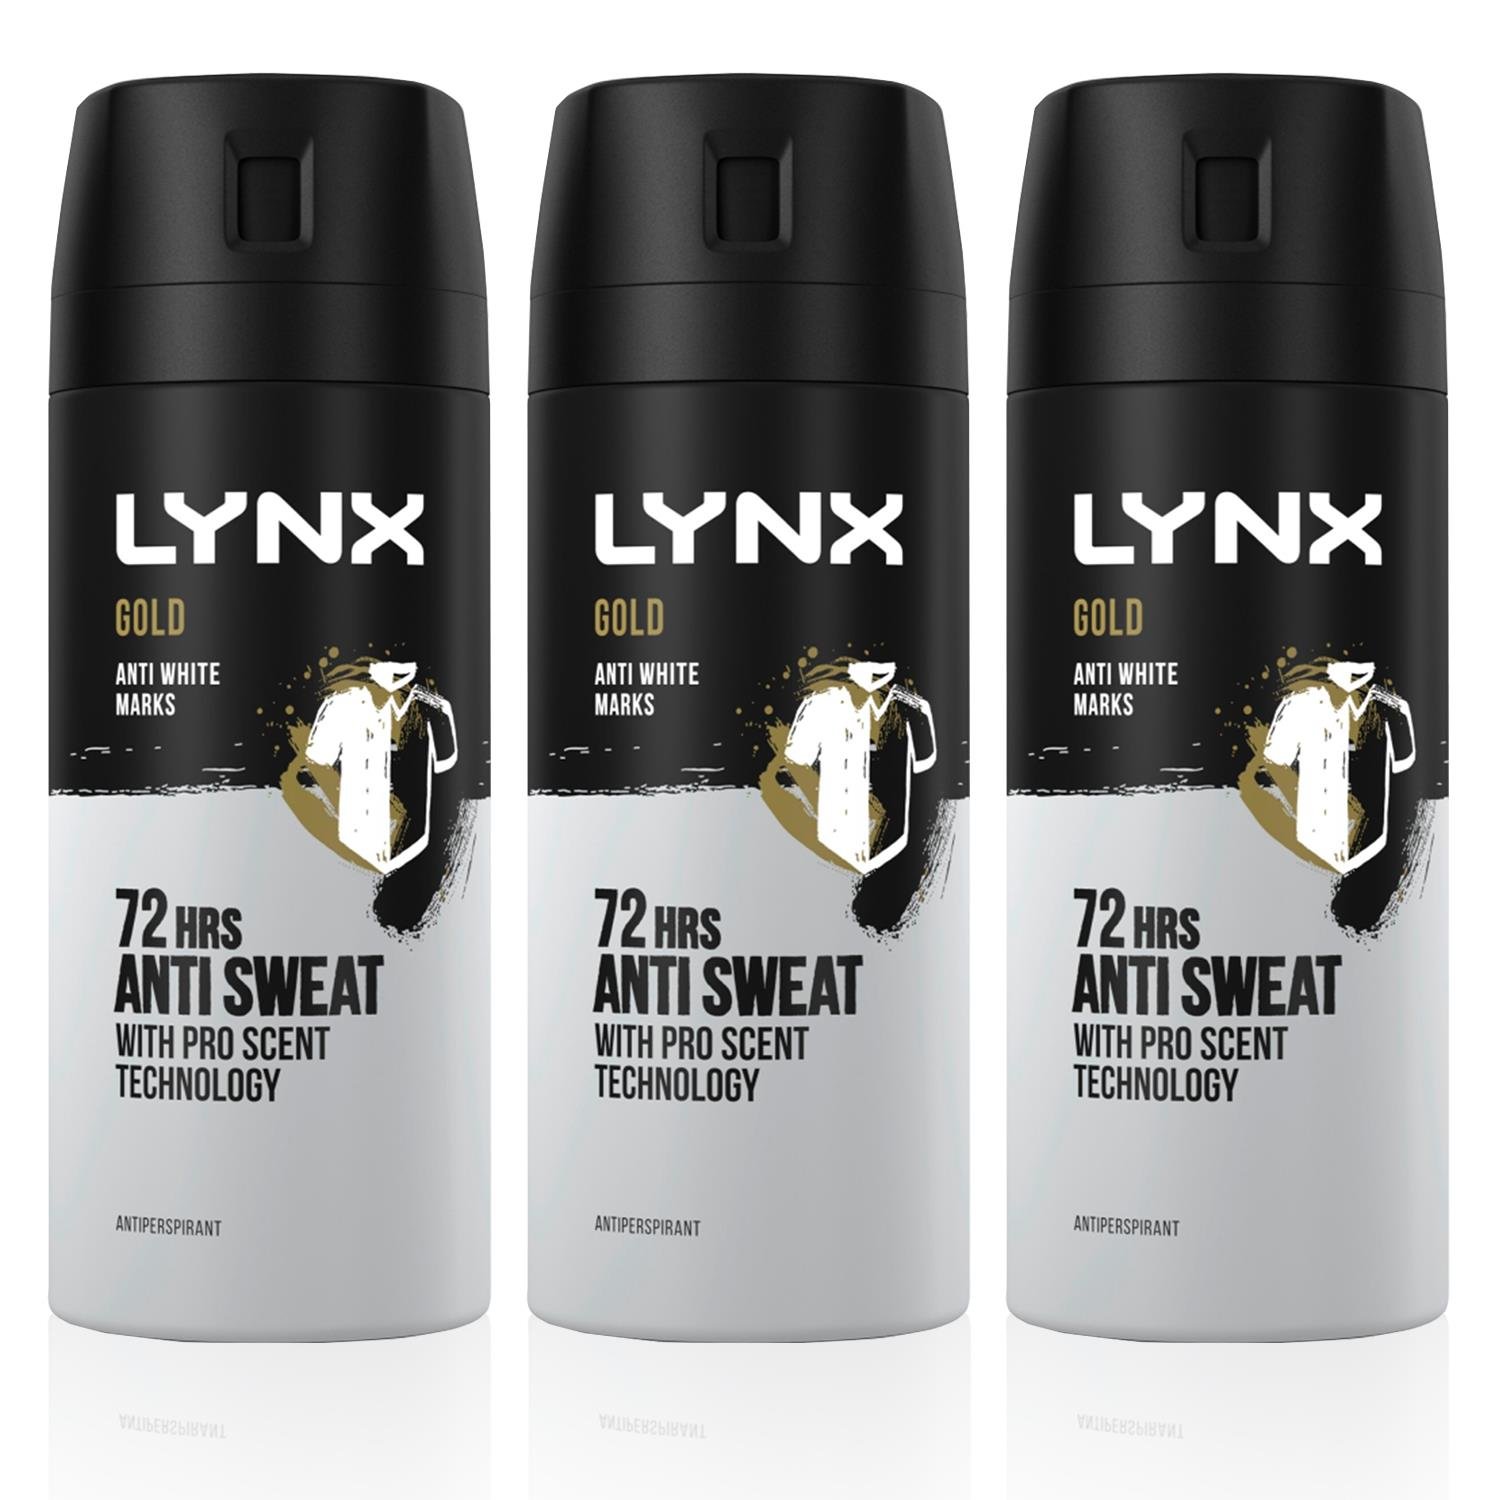 Lynx Gold 72 HRS Anti Sweat Anti-Perspirant Body Spray for Men, 3x150ml